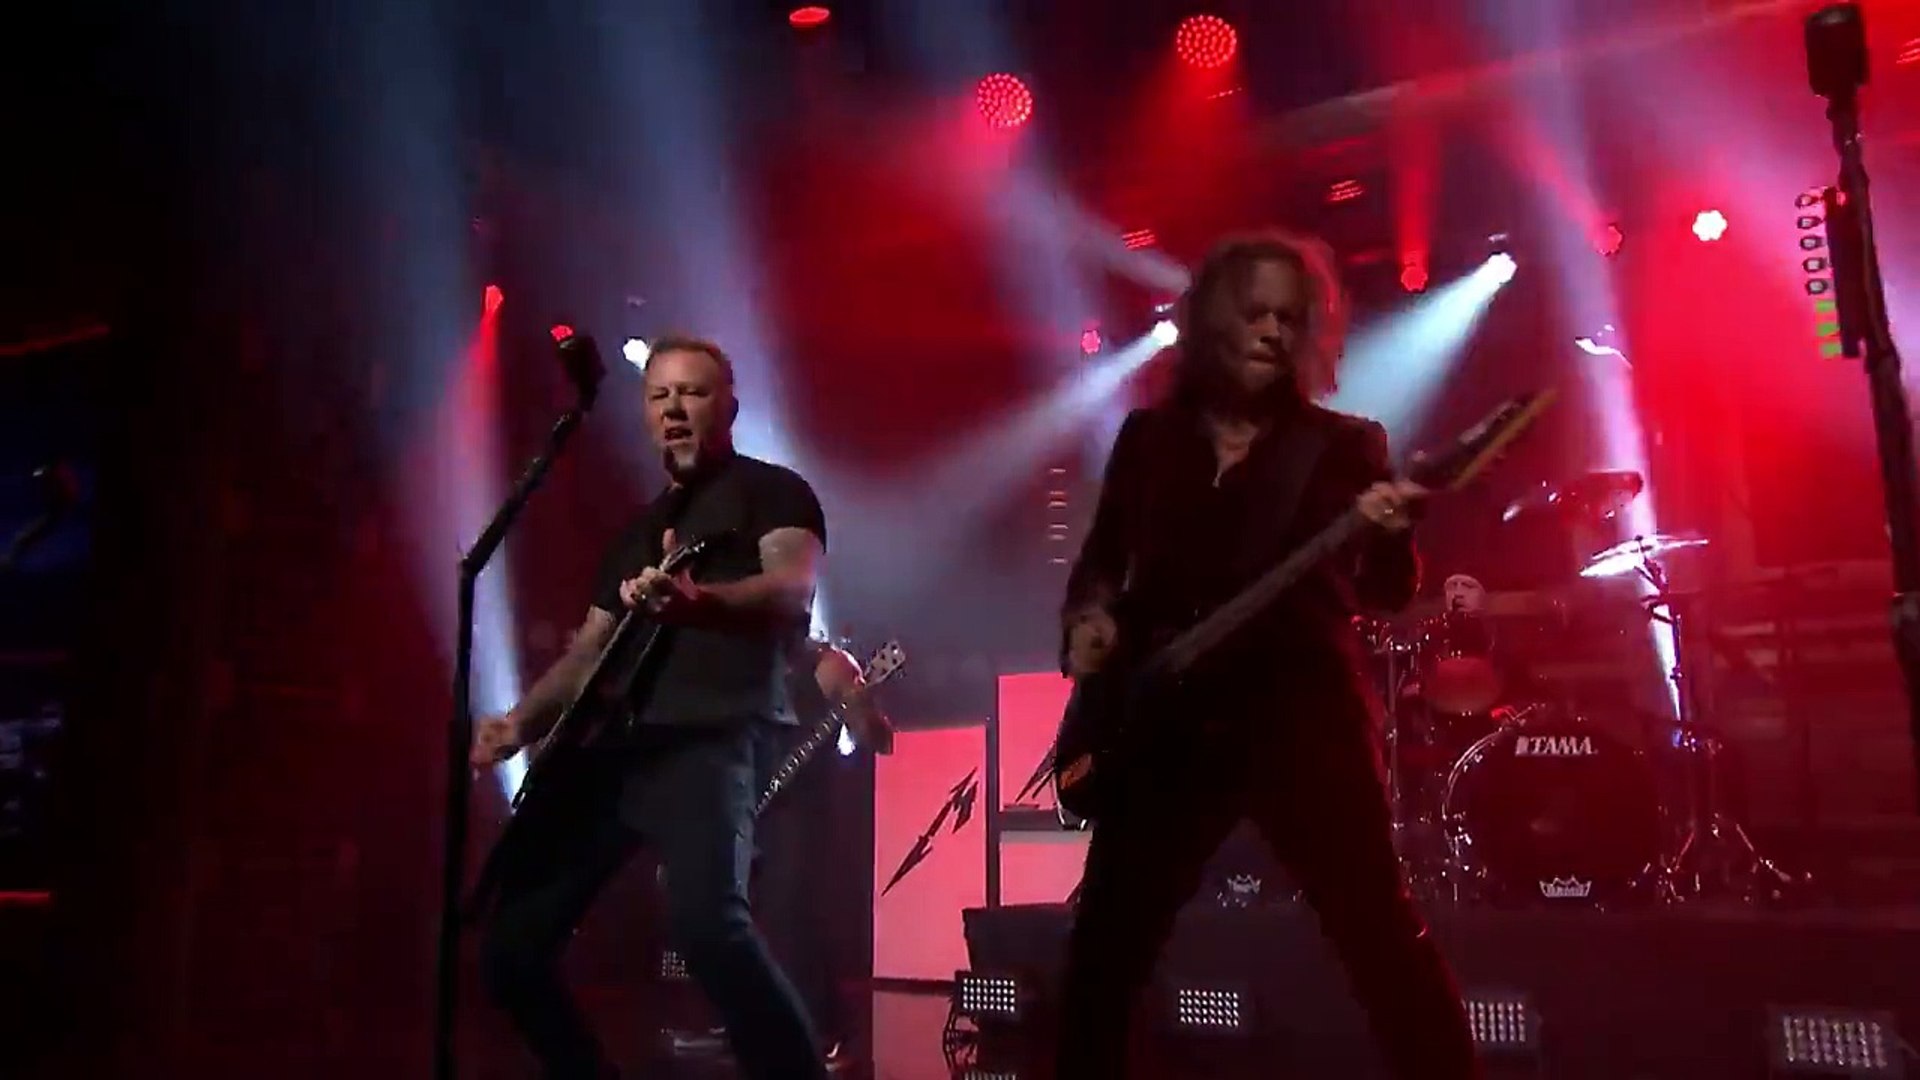 Metallica - Moth Into Flame mv2